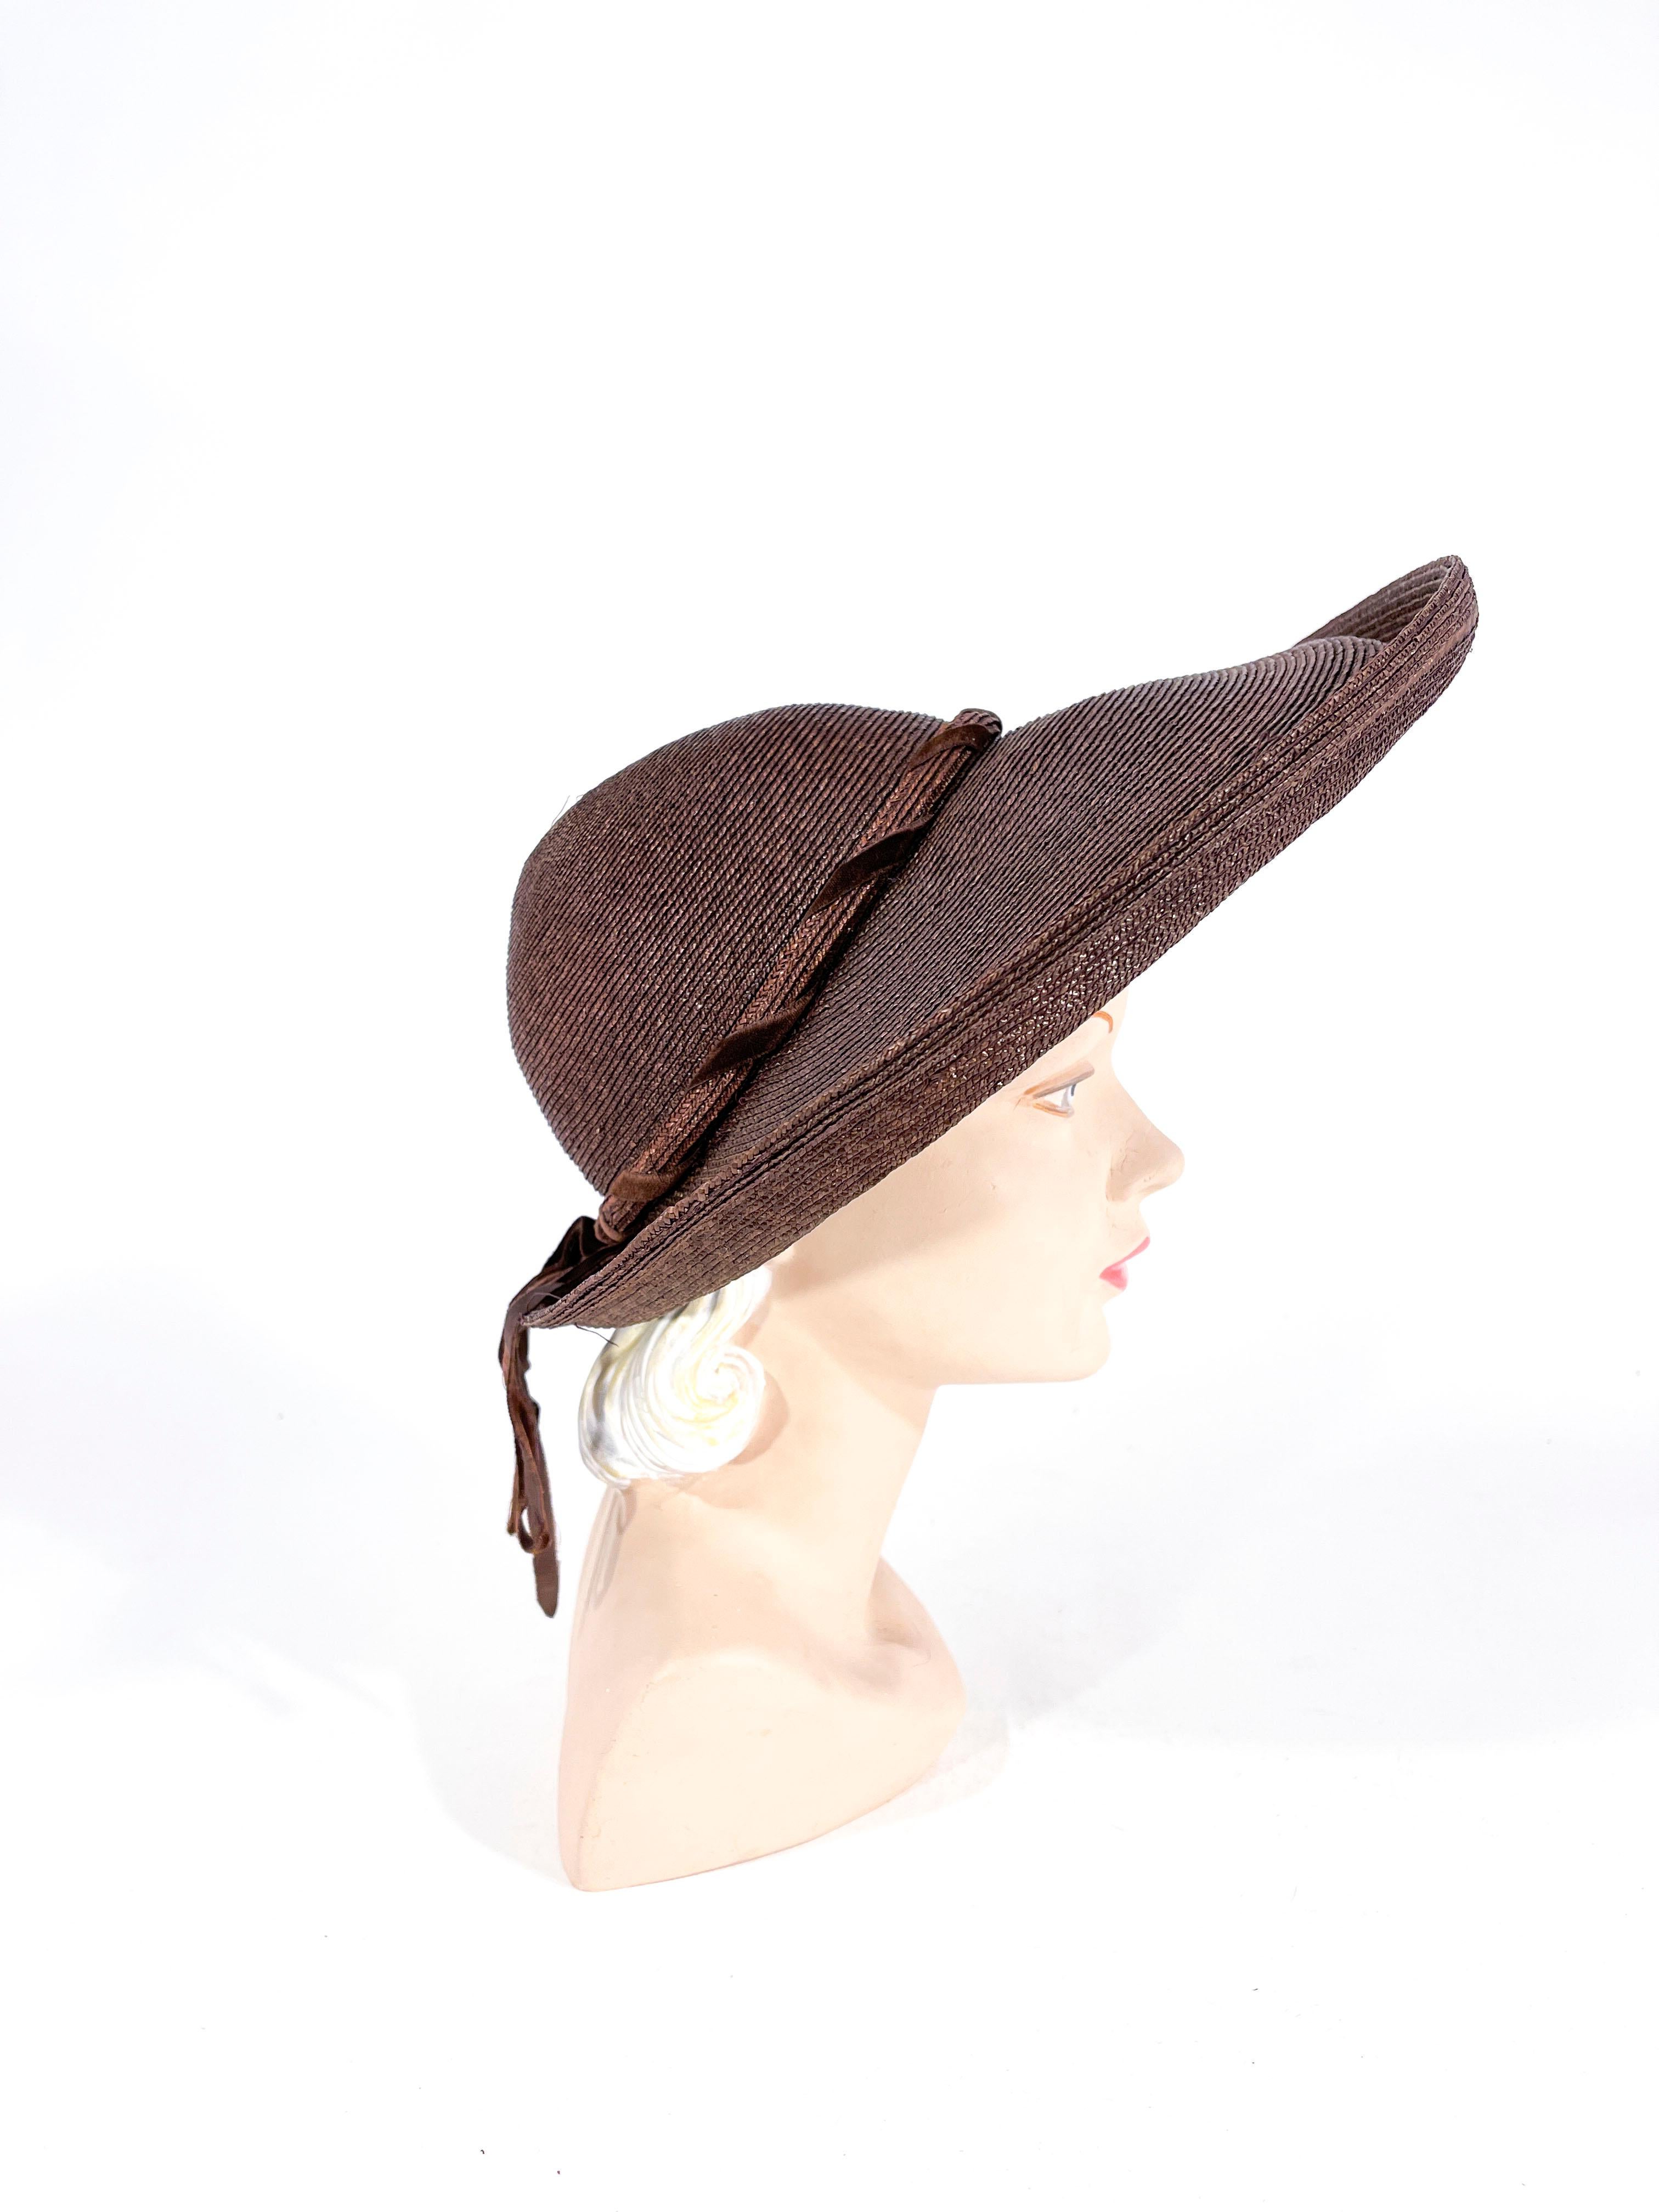 1930s straw hat